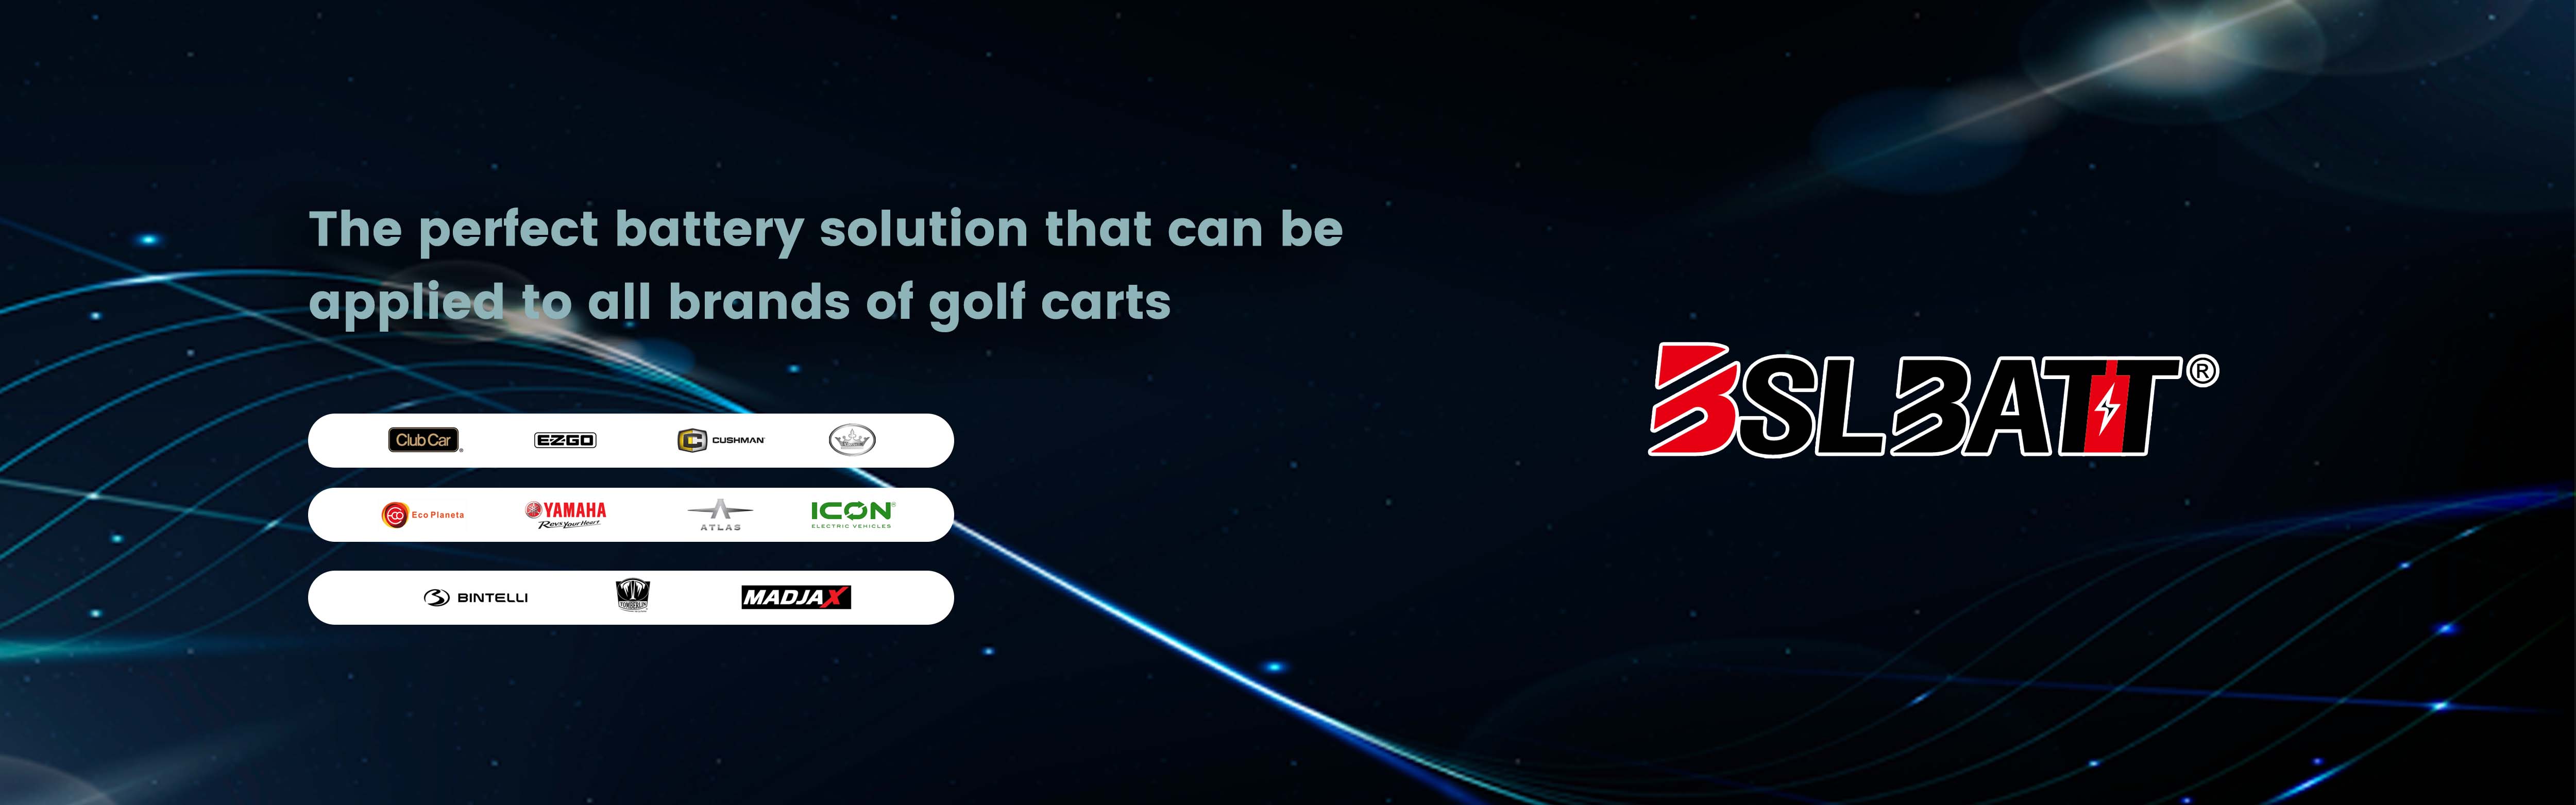 BSLBATT Lifepo4 Compatible Golf Cart Brands